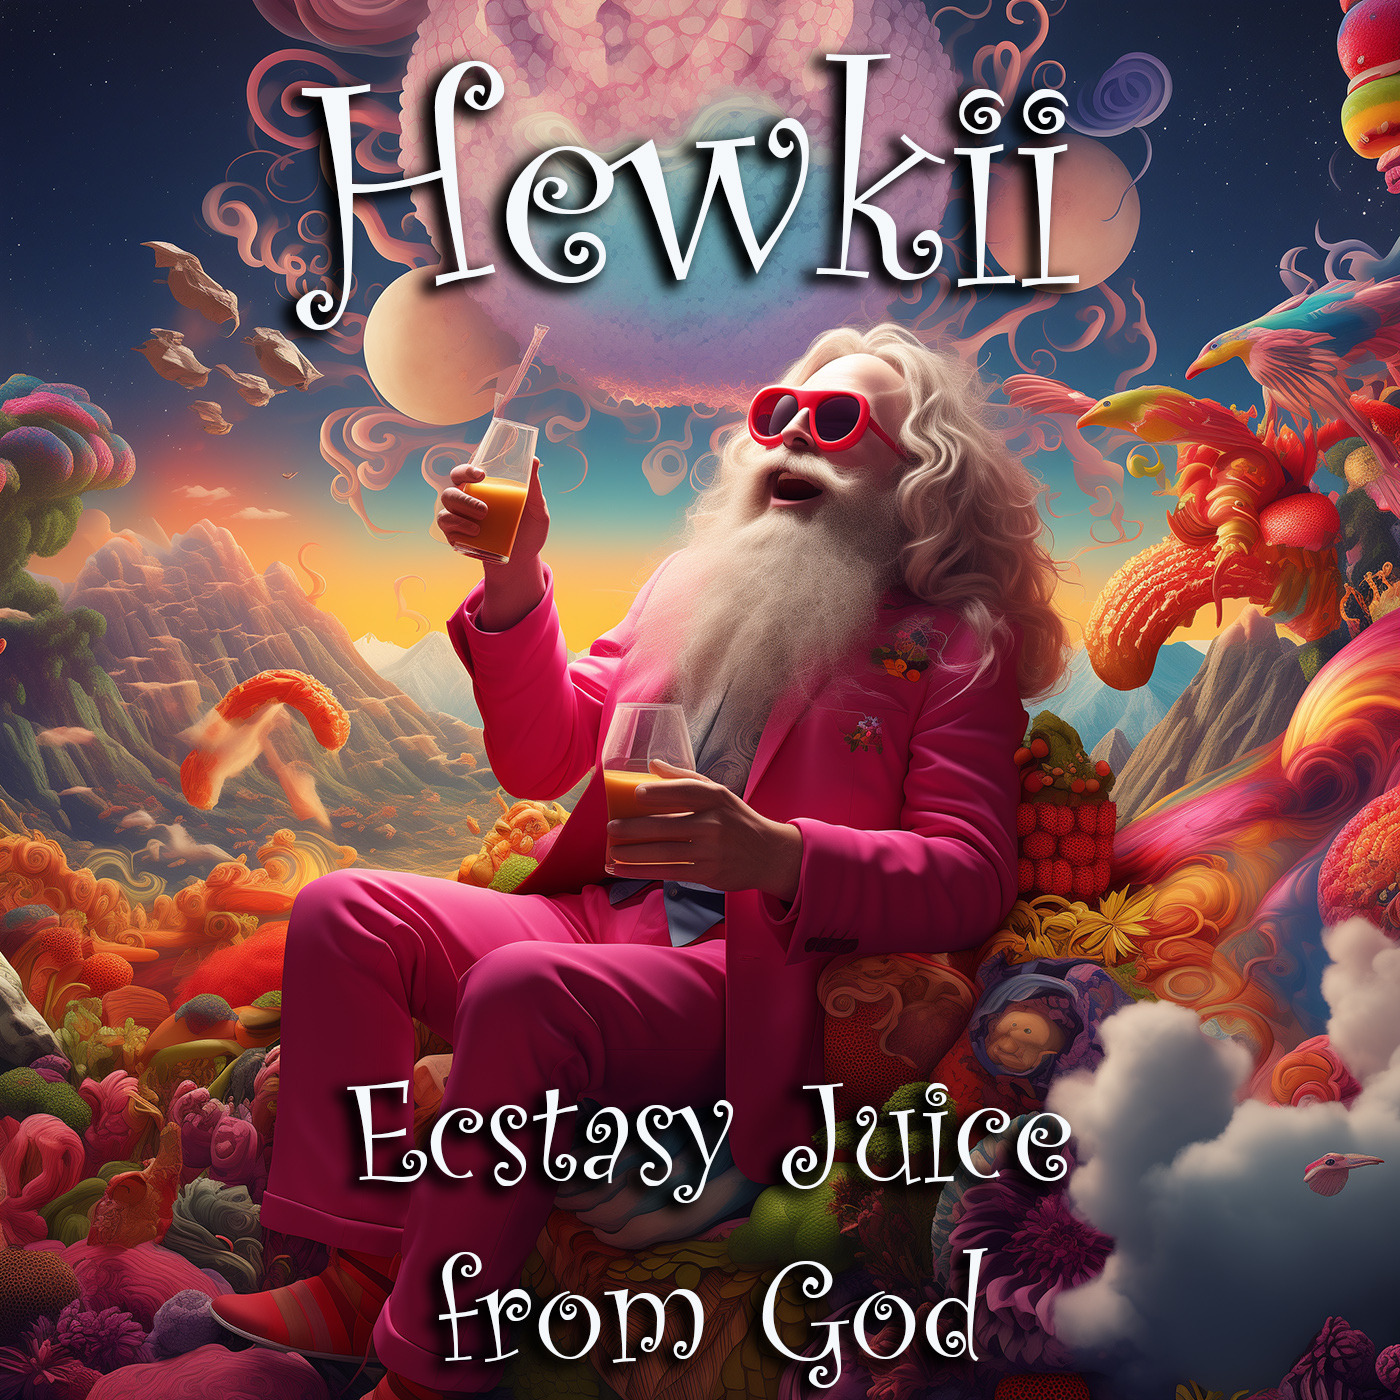 Episode 263: Hewkii - Ecstasy Juice from God